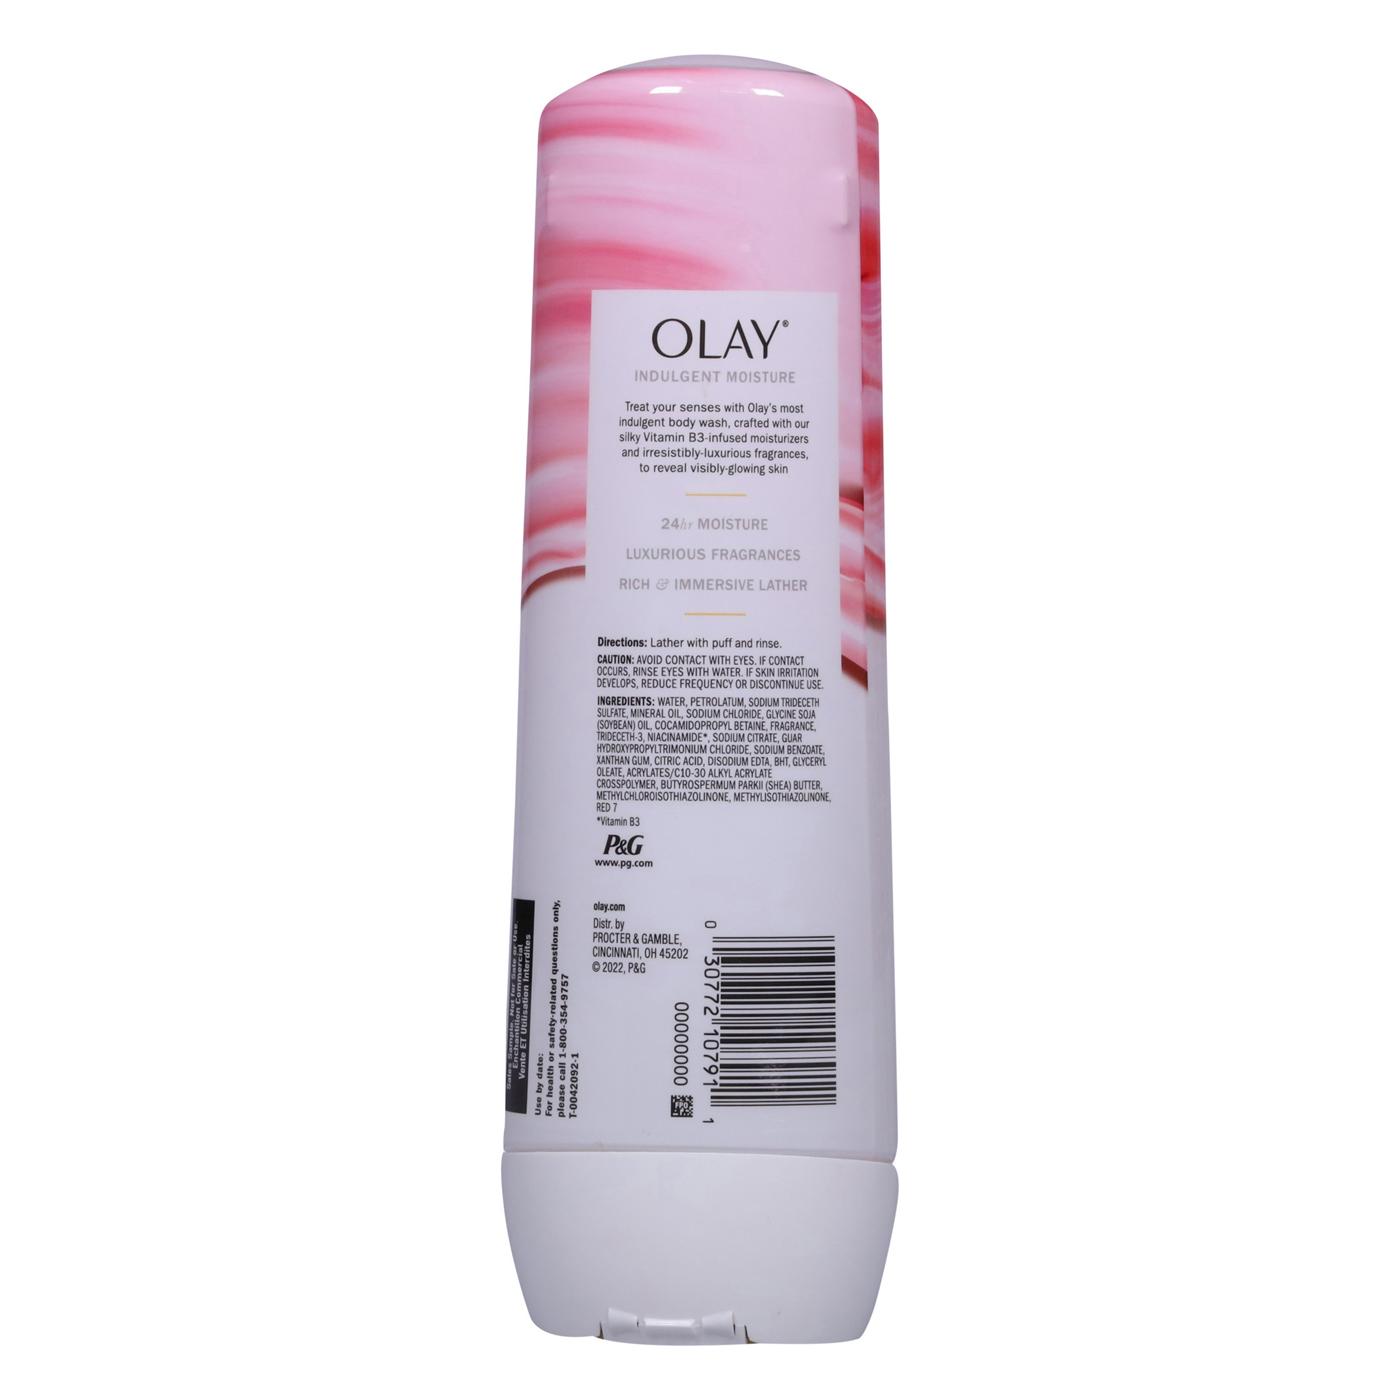 Olay Indulgent Moisture Creme Body Wash - Rose & Cherry; image 2 of 2